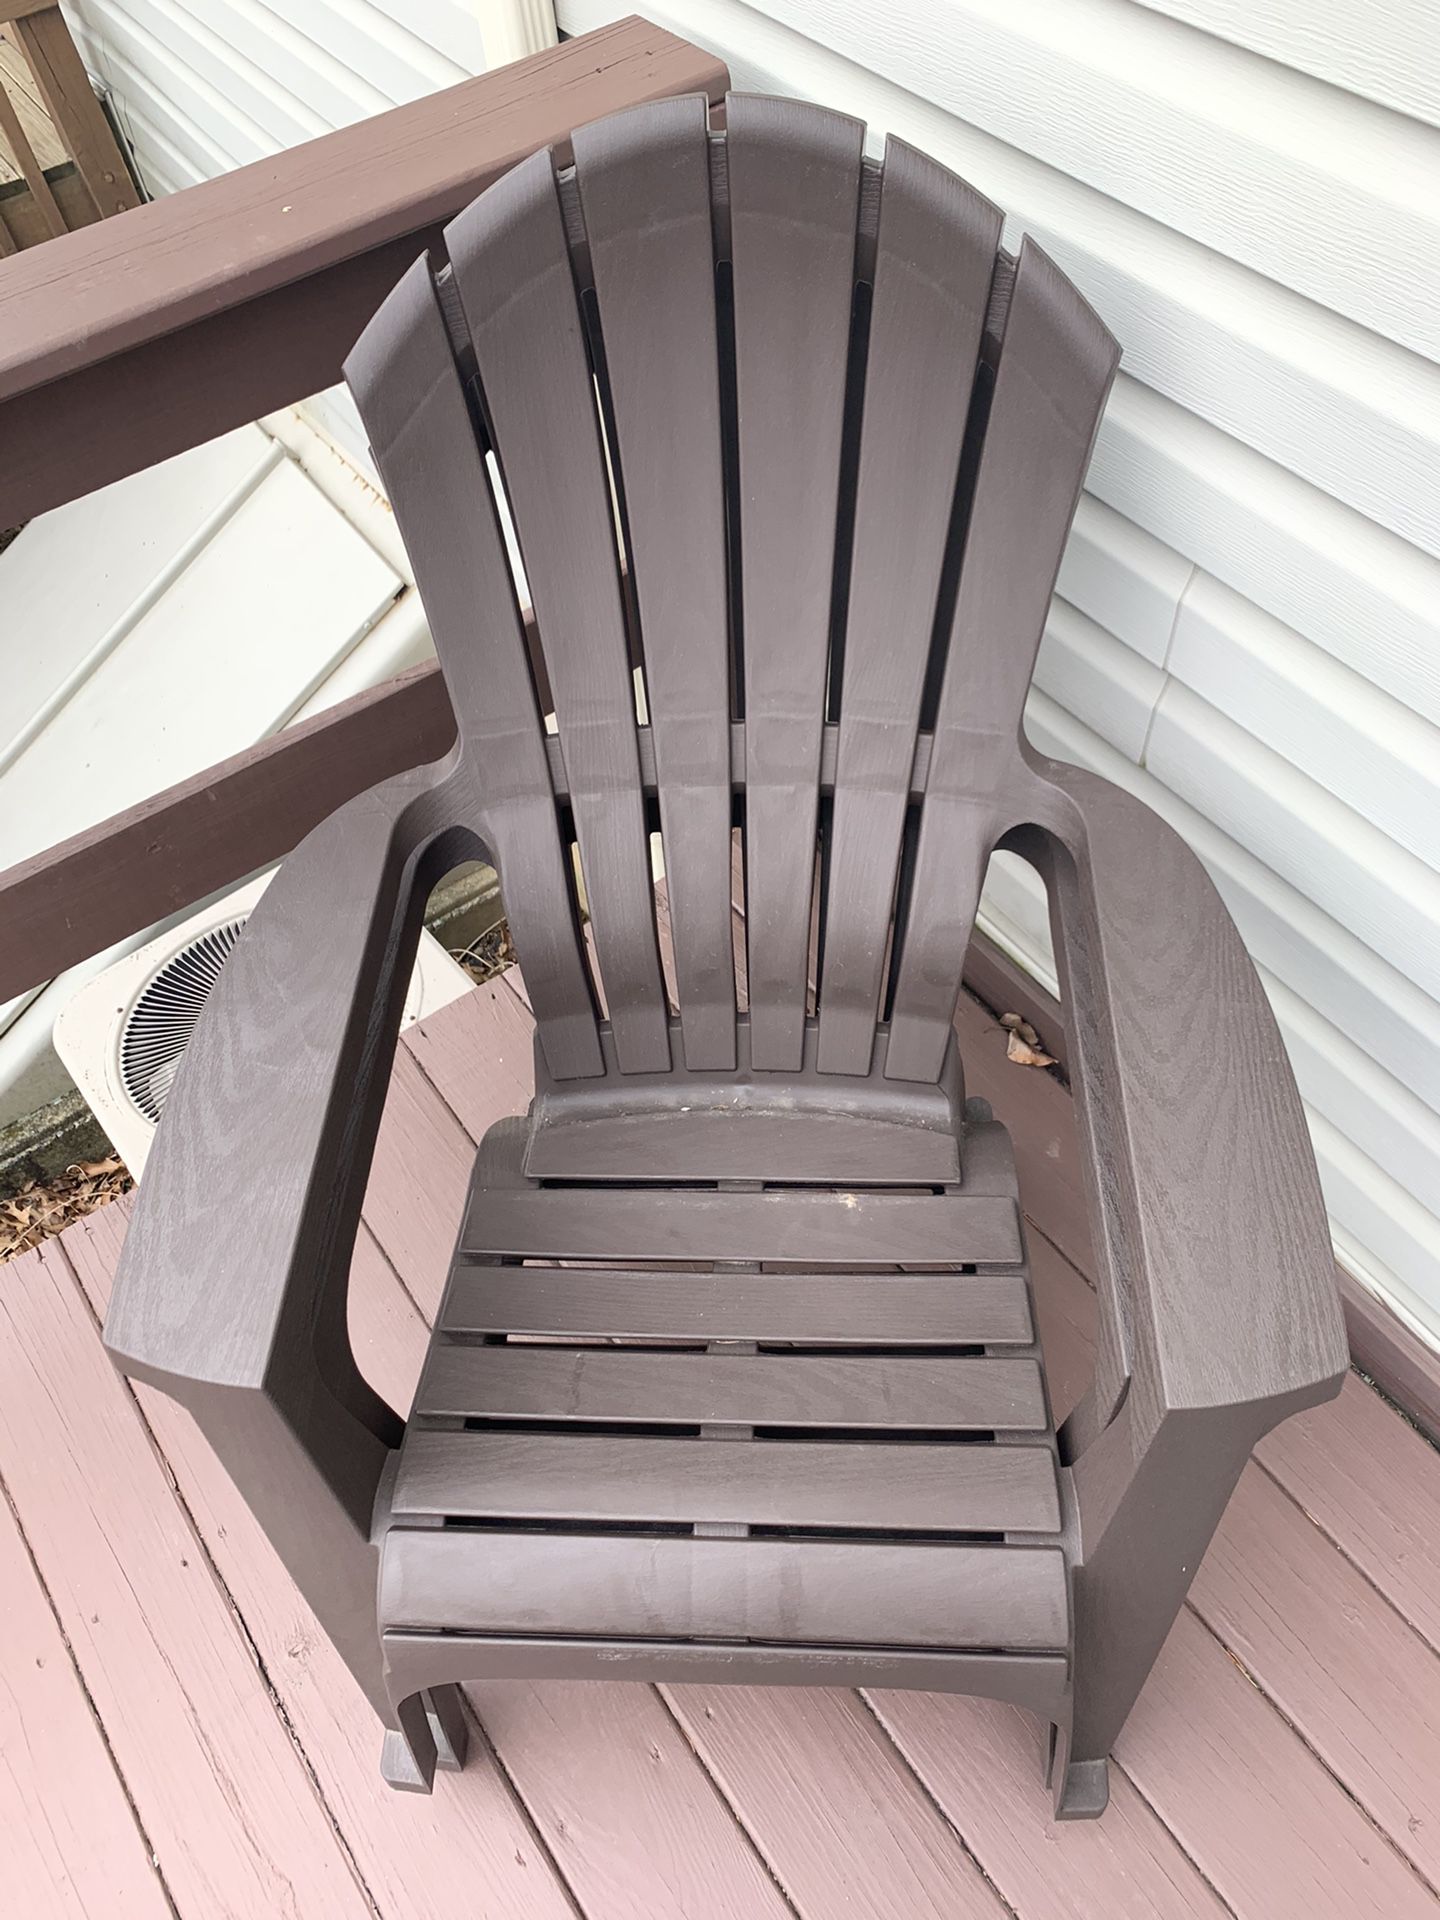 Adams RealComfort 1 Earth Brown Polypropylene Adirondack Chair